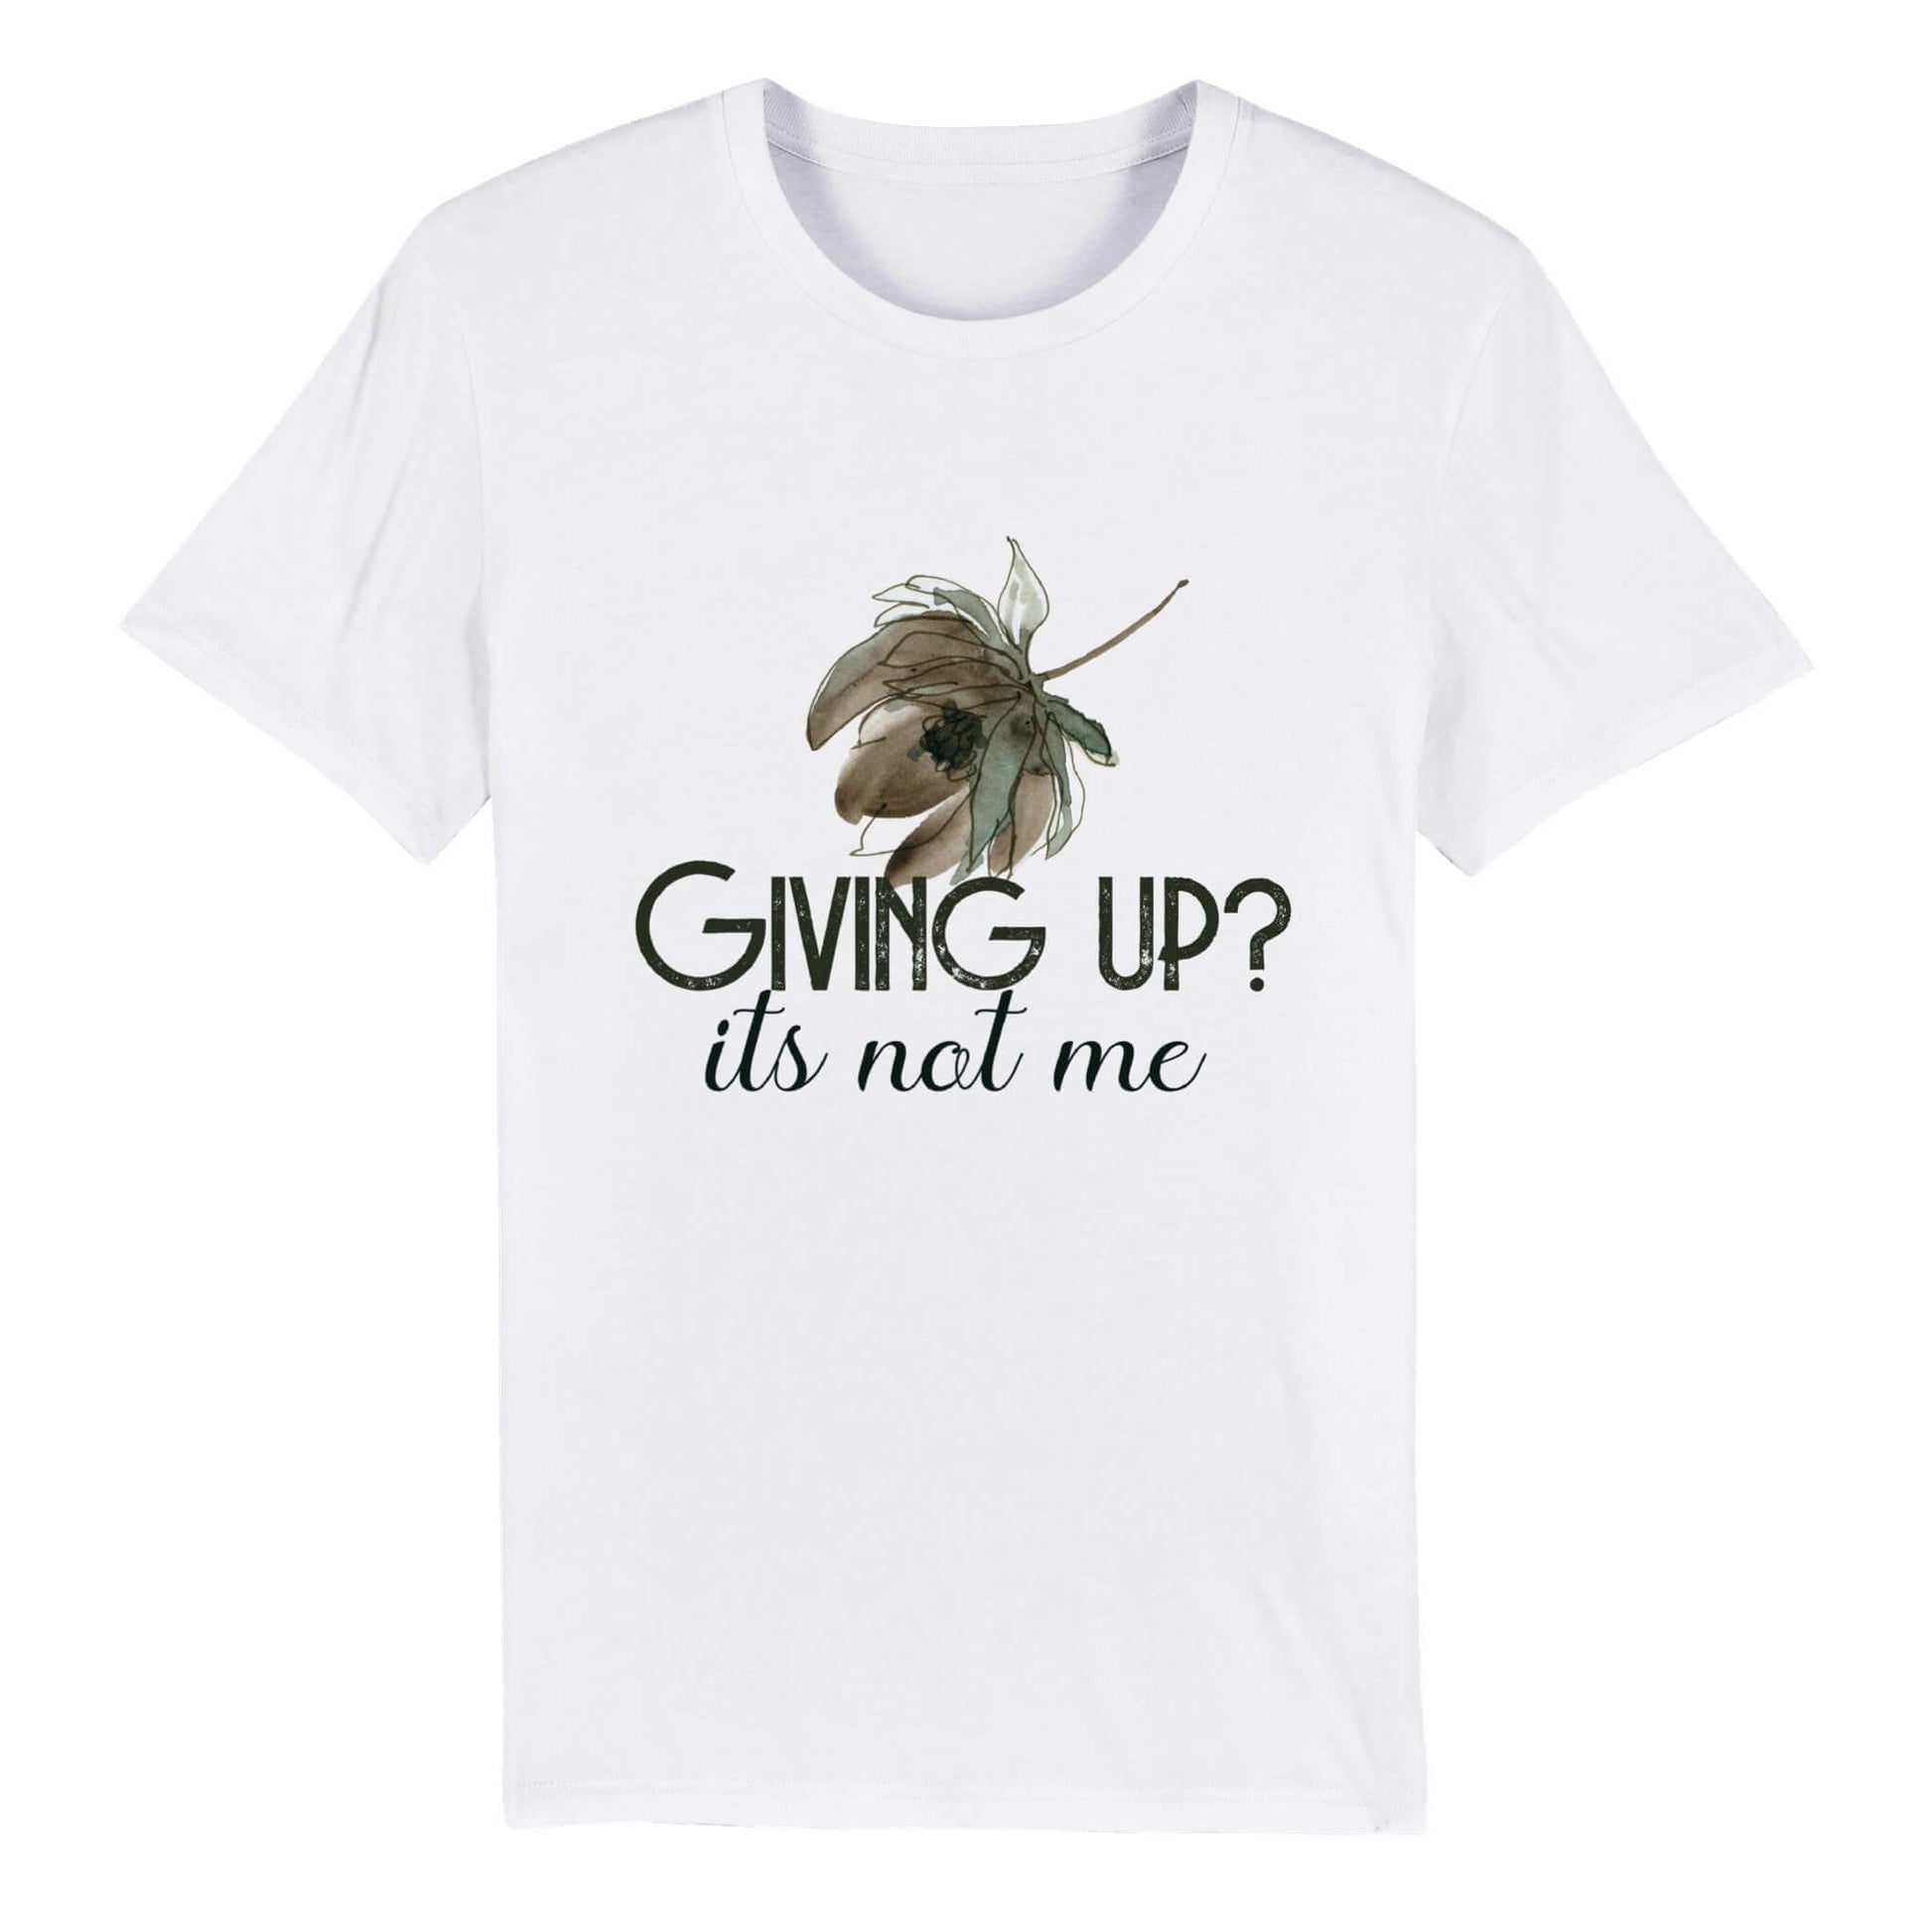 Unisex Crewneck T-shirt "Giving up? It's not me" - Just Baskets